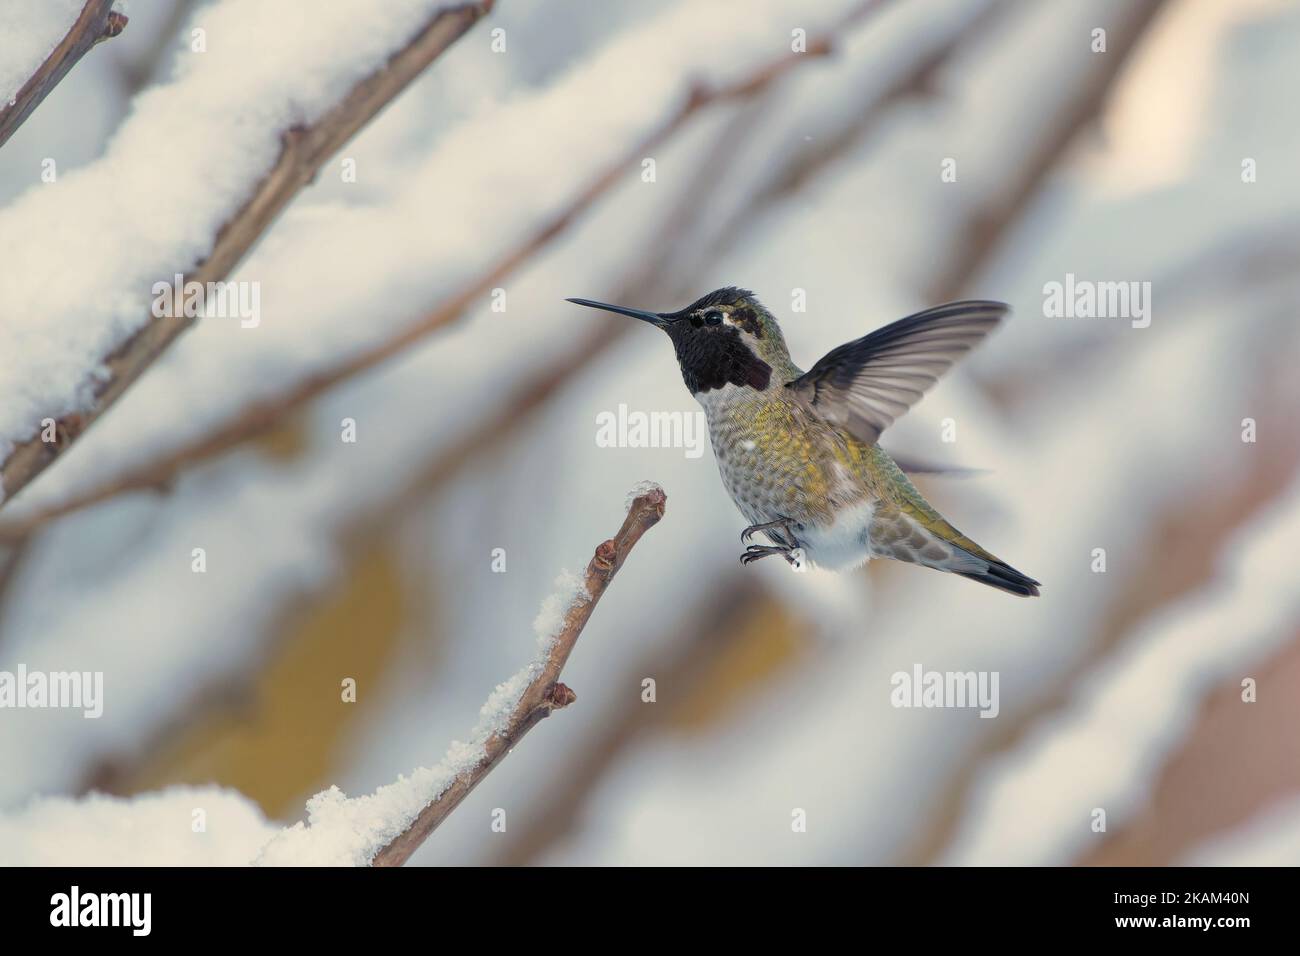 A closeup shot of a hummingbird approaching on a snowy branch Stock Photo